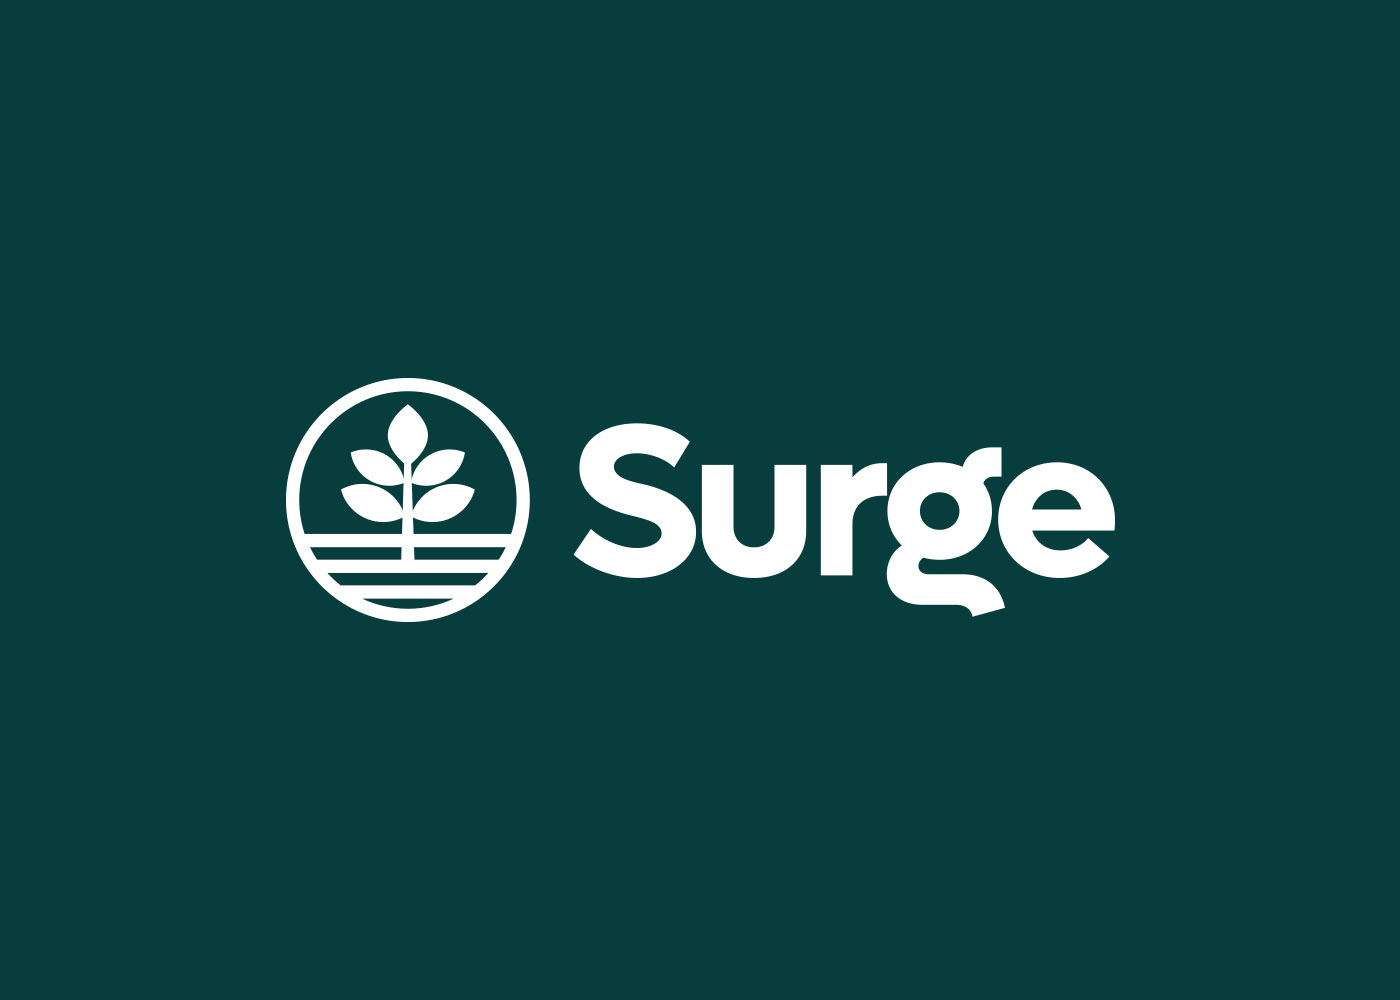 Surge Brand Design